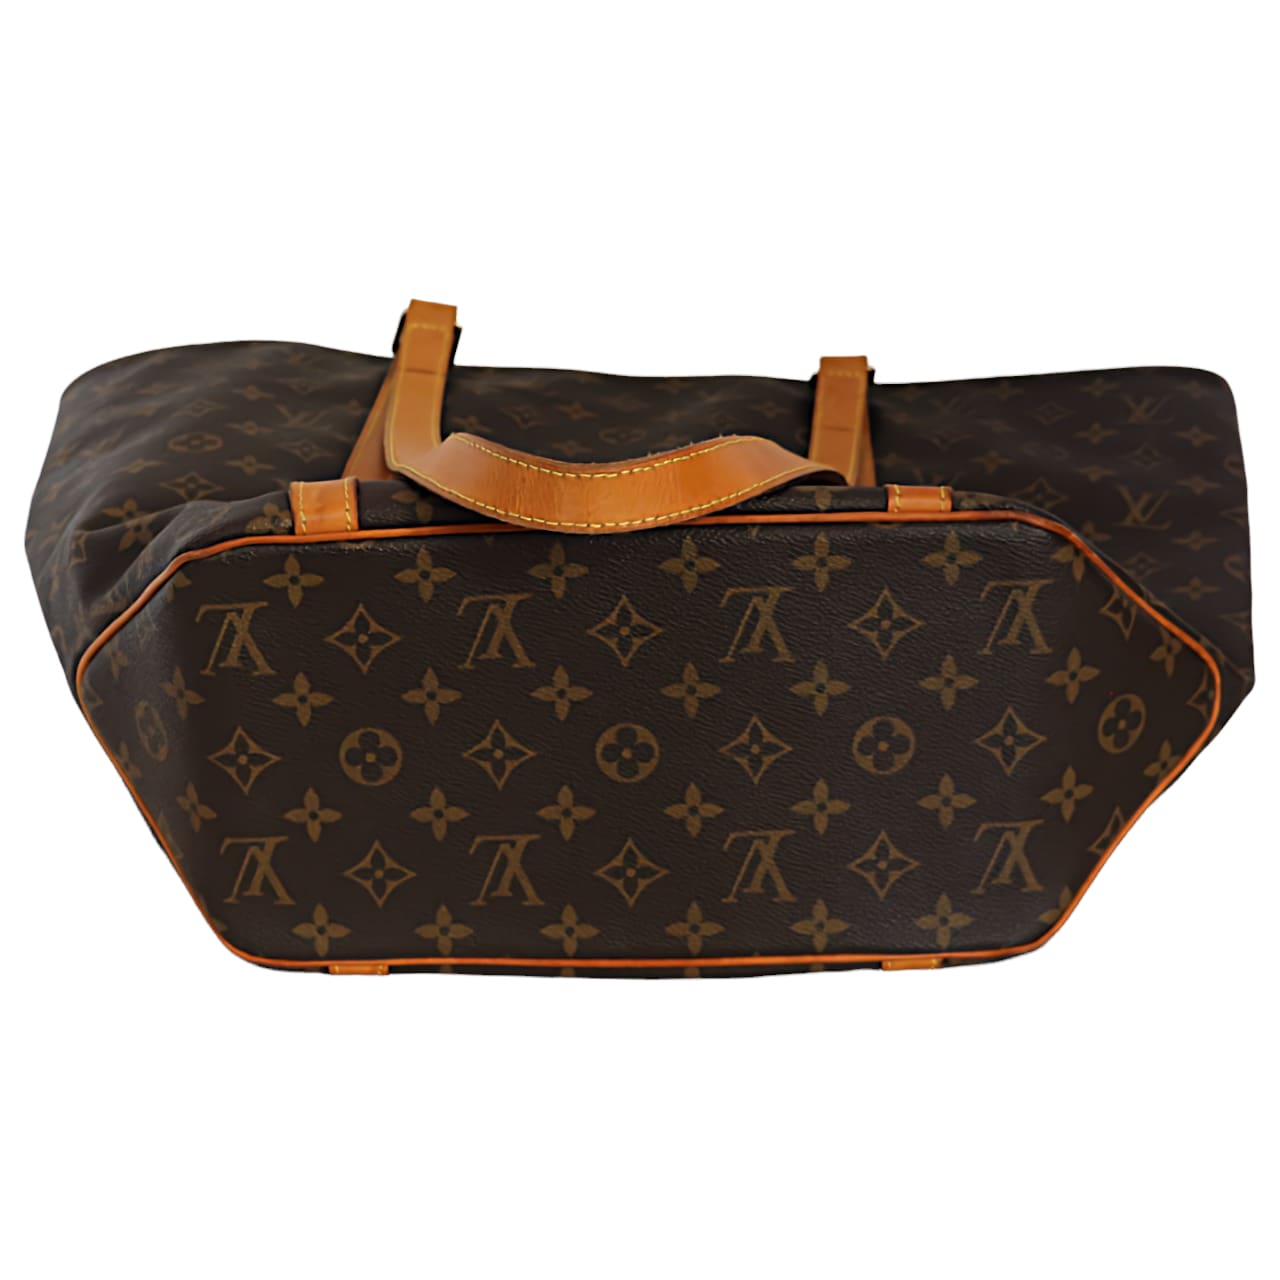 Louis Vuitton Sac Shopping Tote Bag - Reetzy